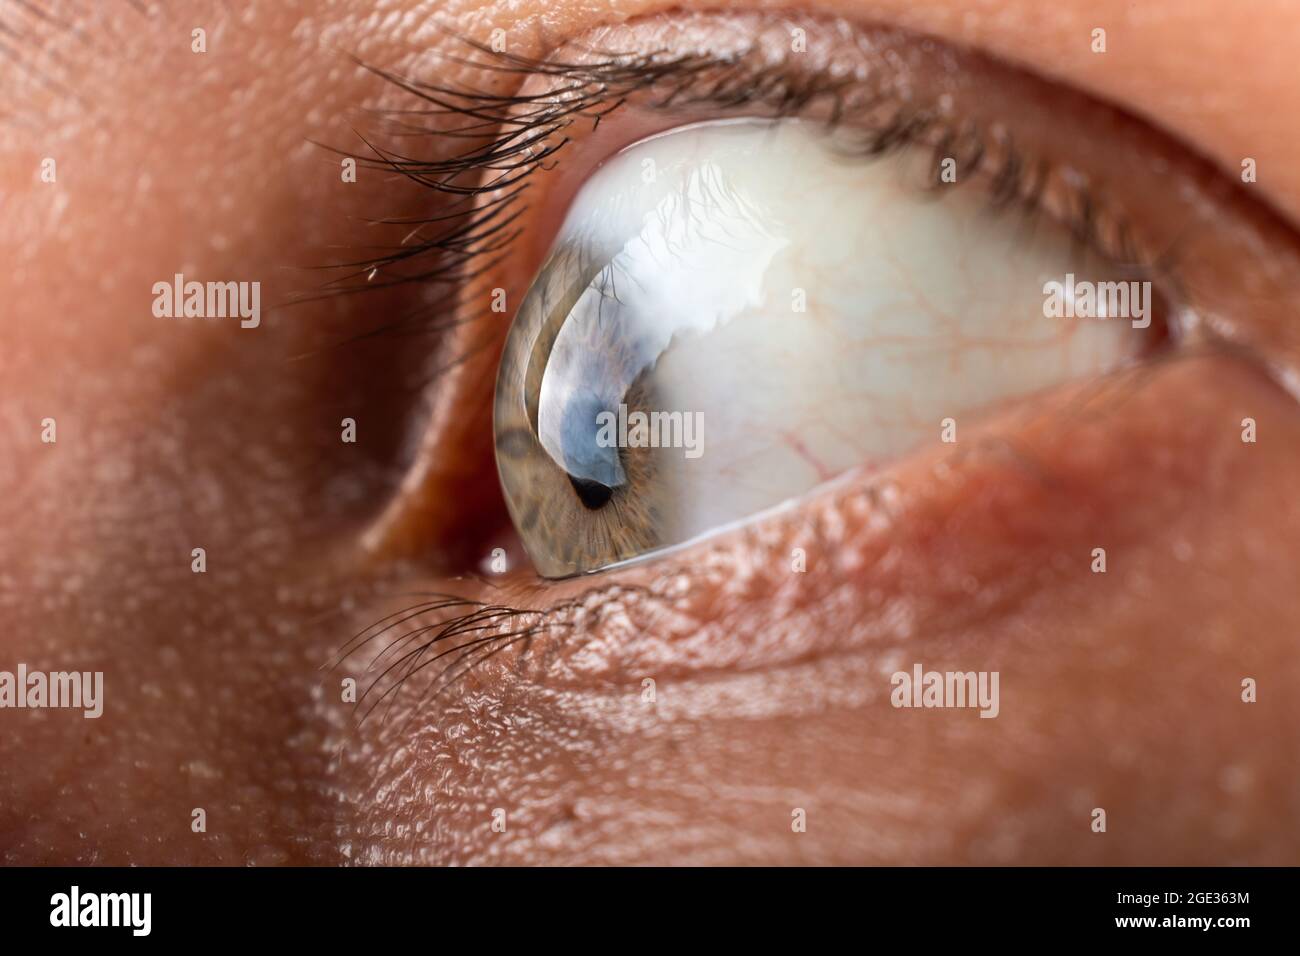 eye with corneal dystrophy closeup, keratoconus disease thinning of the cornea. Stock Photo